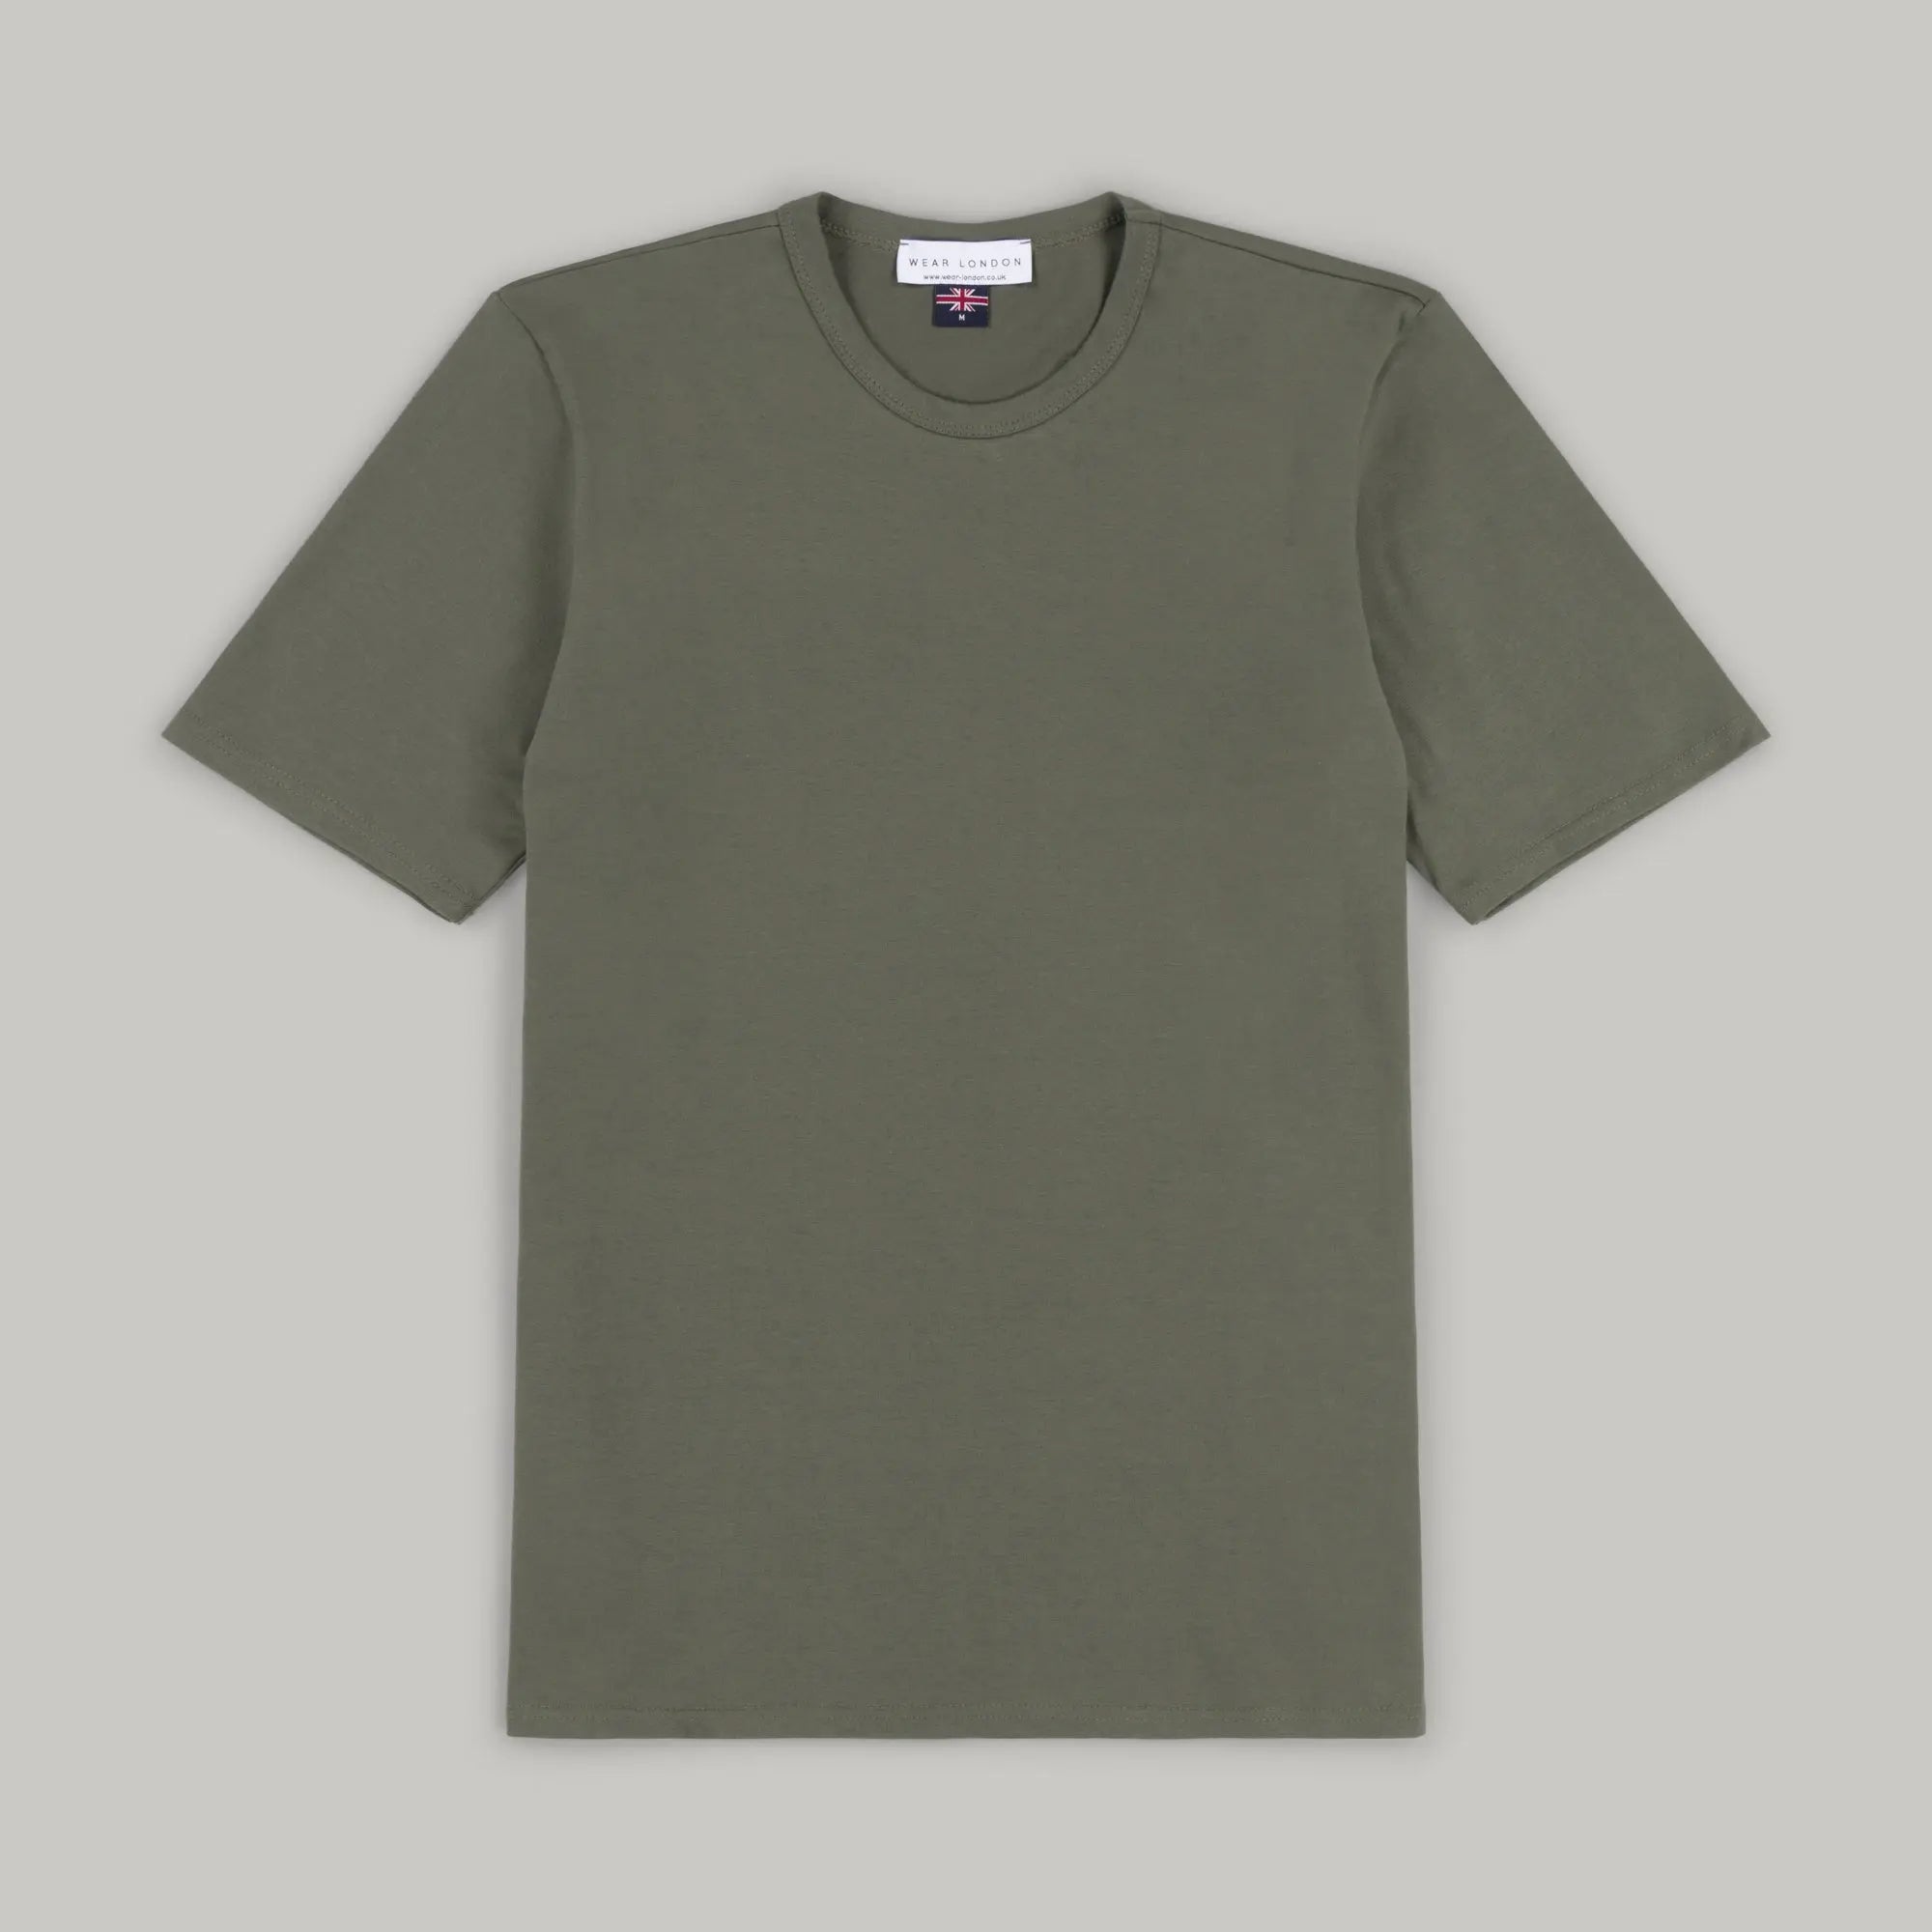 Trueman Short Sleeve Tee Shirt - Olive Wear London